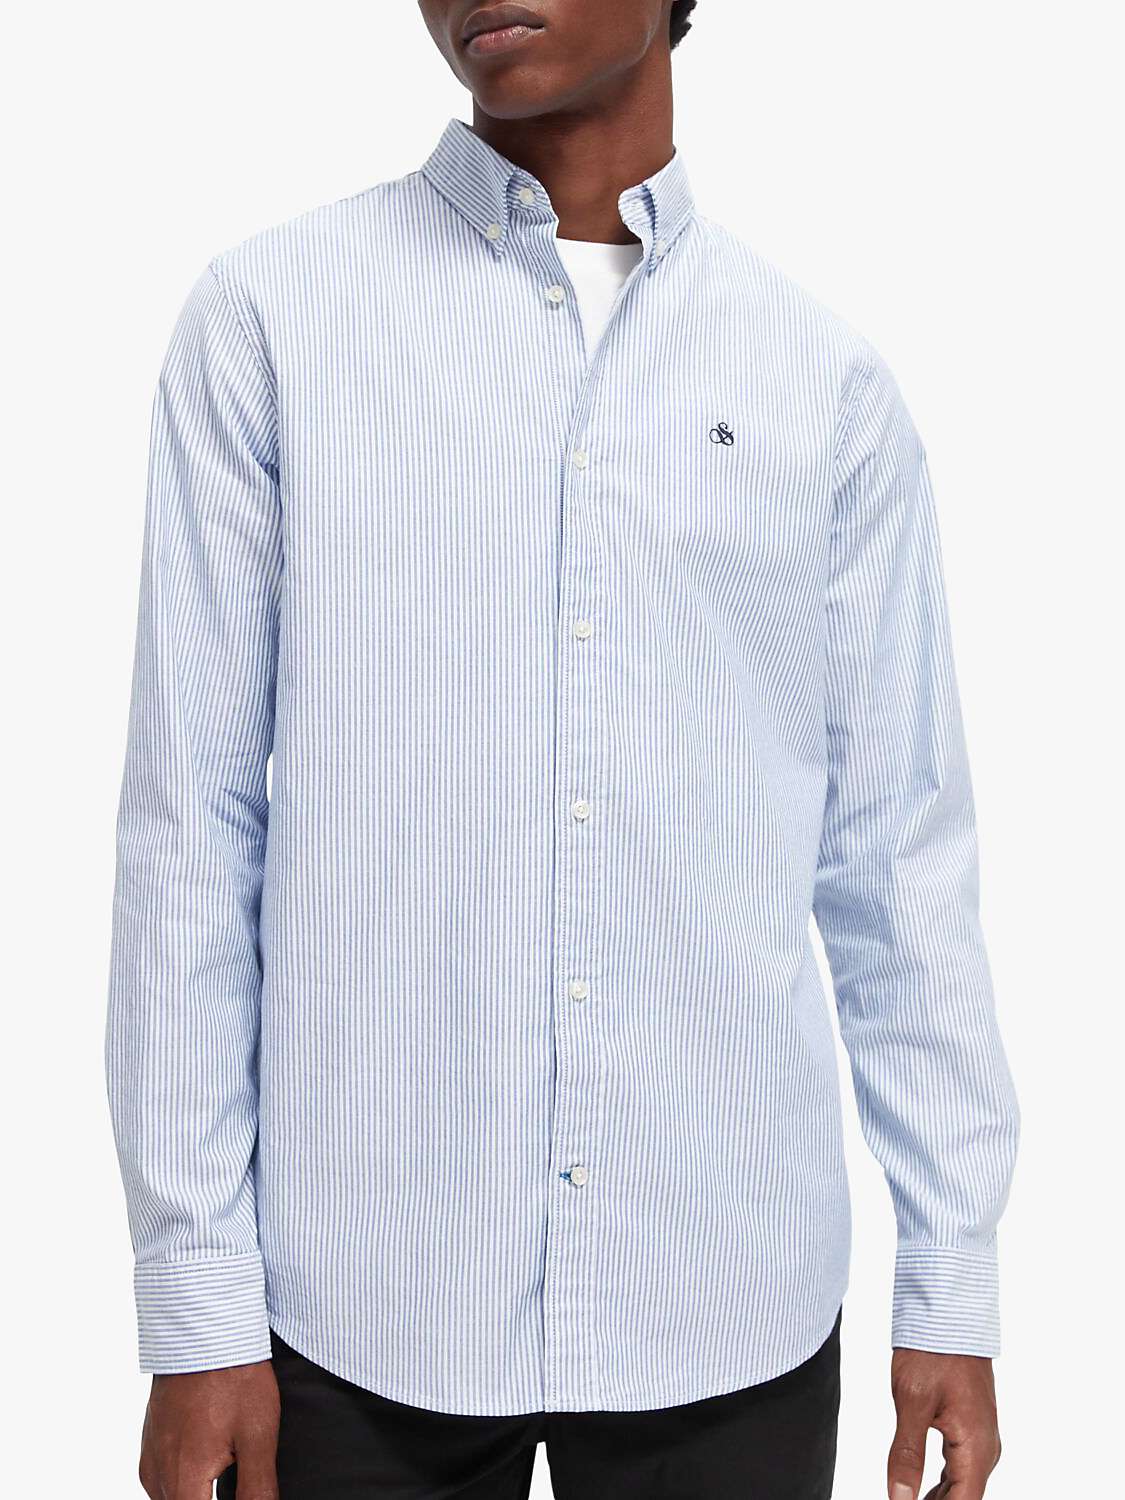 Scotch & Soda Stripe Oxford Regular Fit Shirt, 0217 - Combo A at